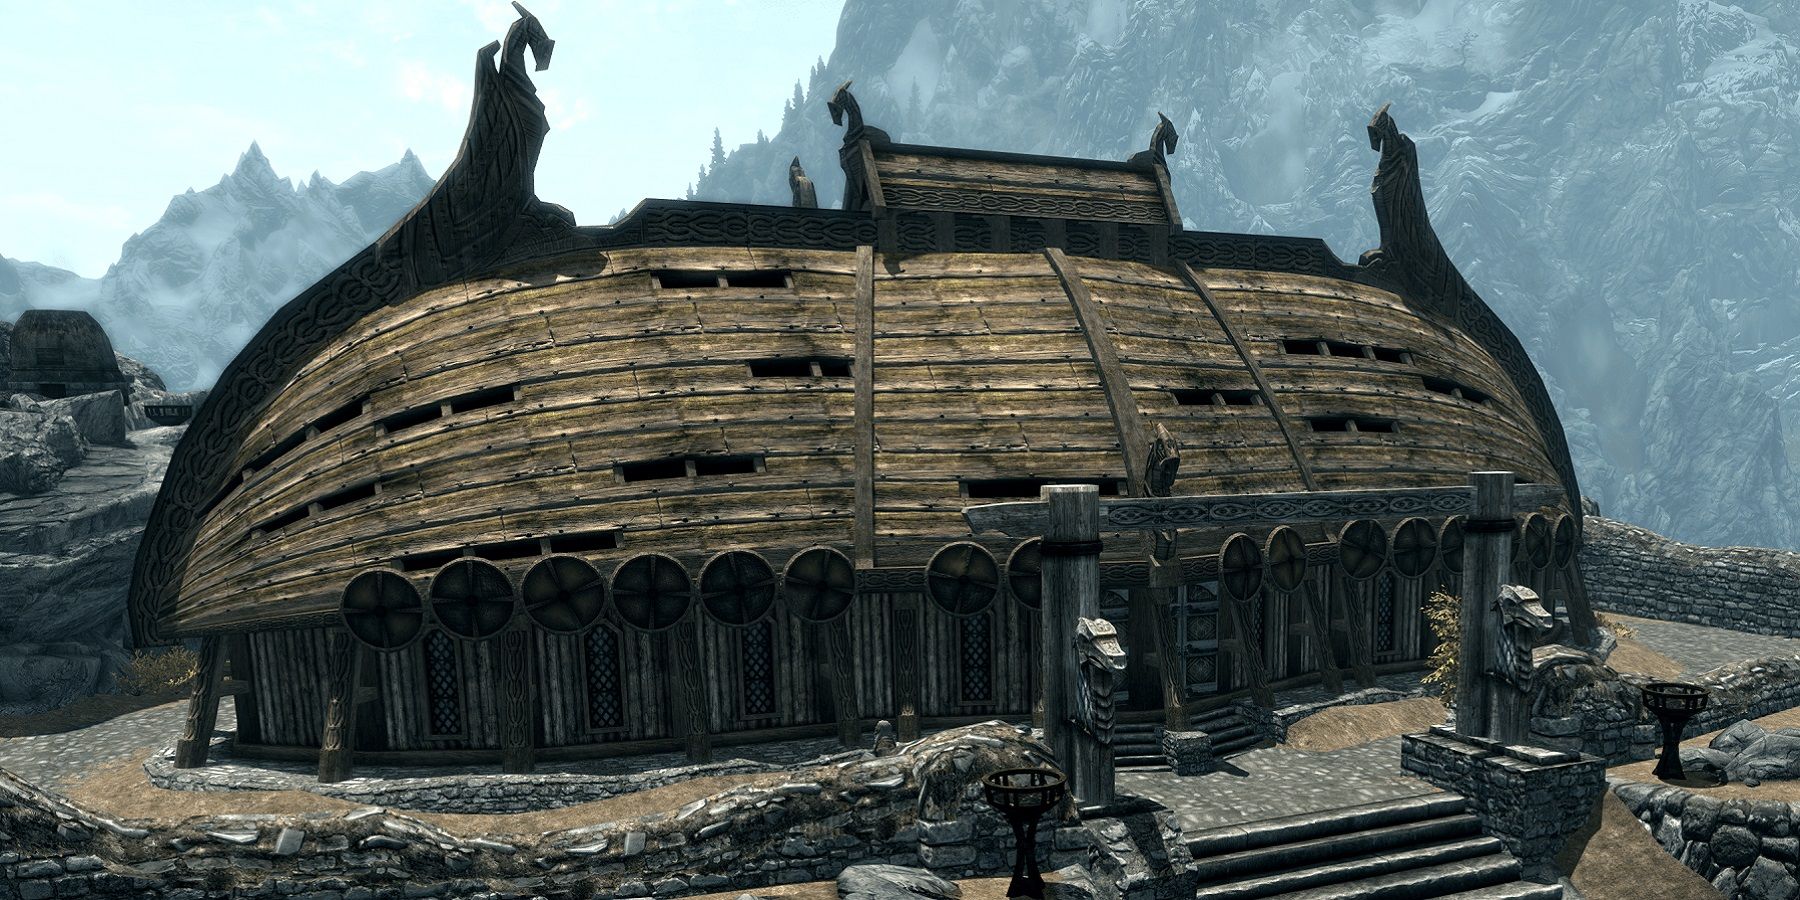 Image from Skyrim showing the Jorrvaskr building in Whiterun.